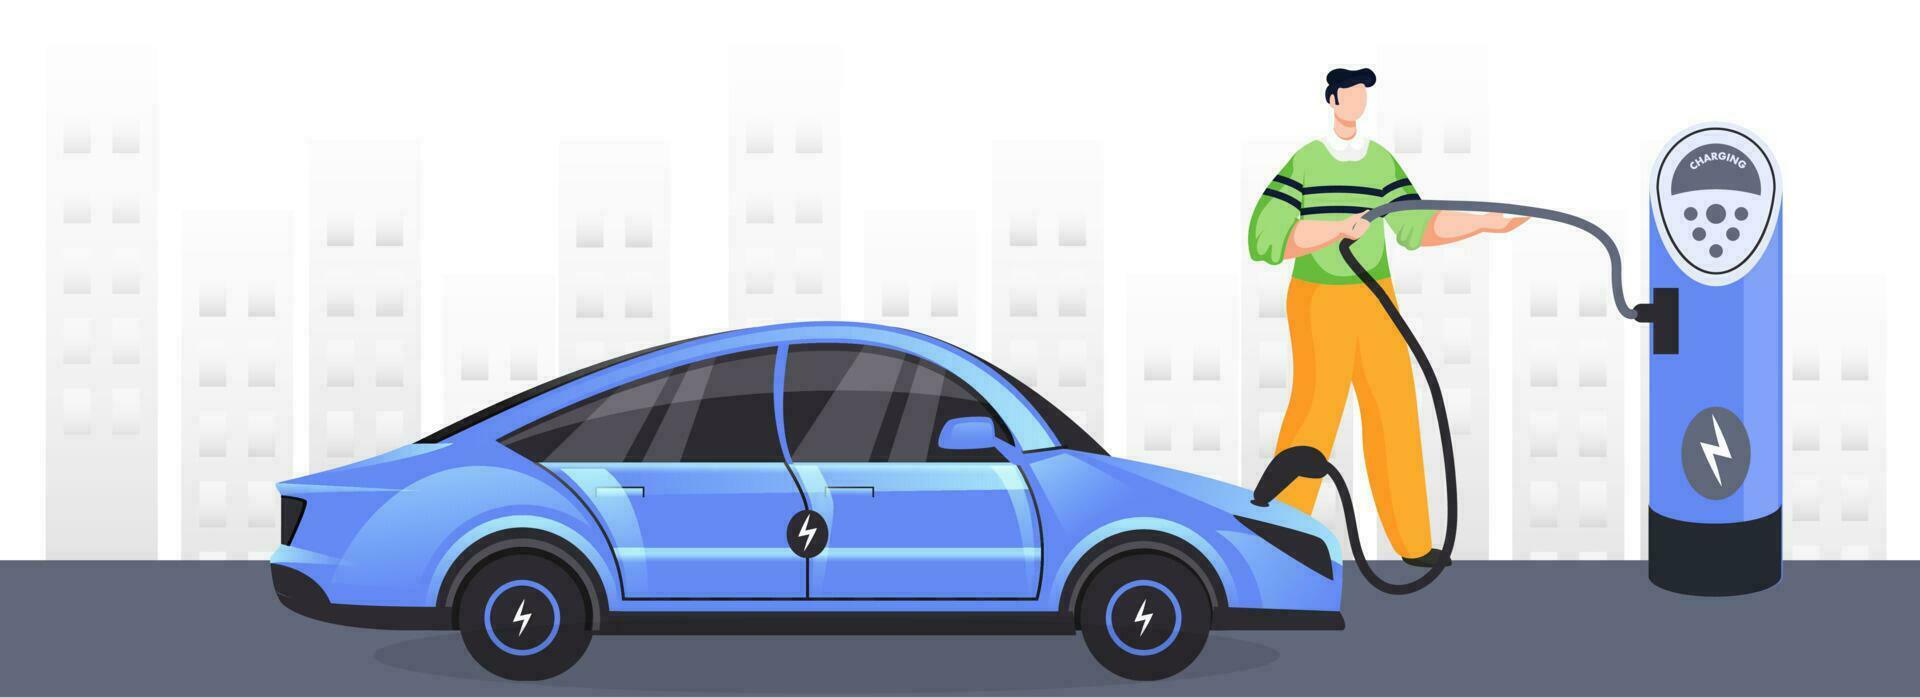 ilustración de hombre cargando eléctrico coche a poder estación en ciudad ver antecedentes. encabezamiento o bandera diseño. vector